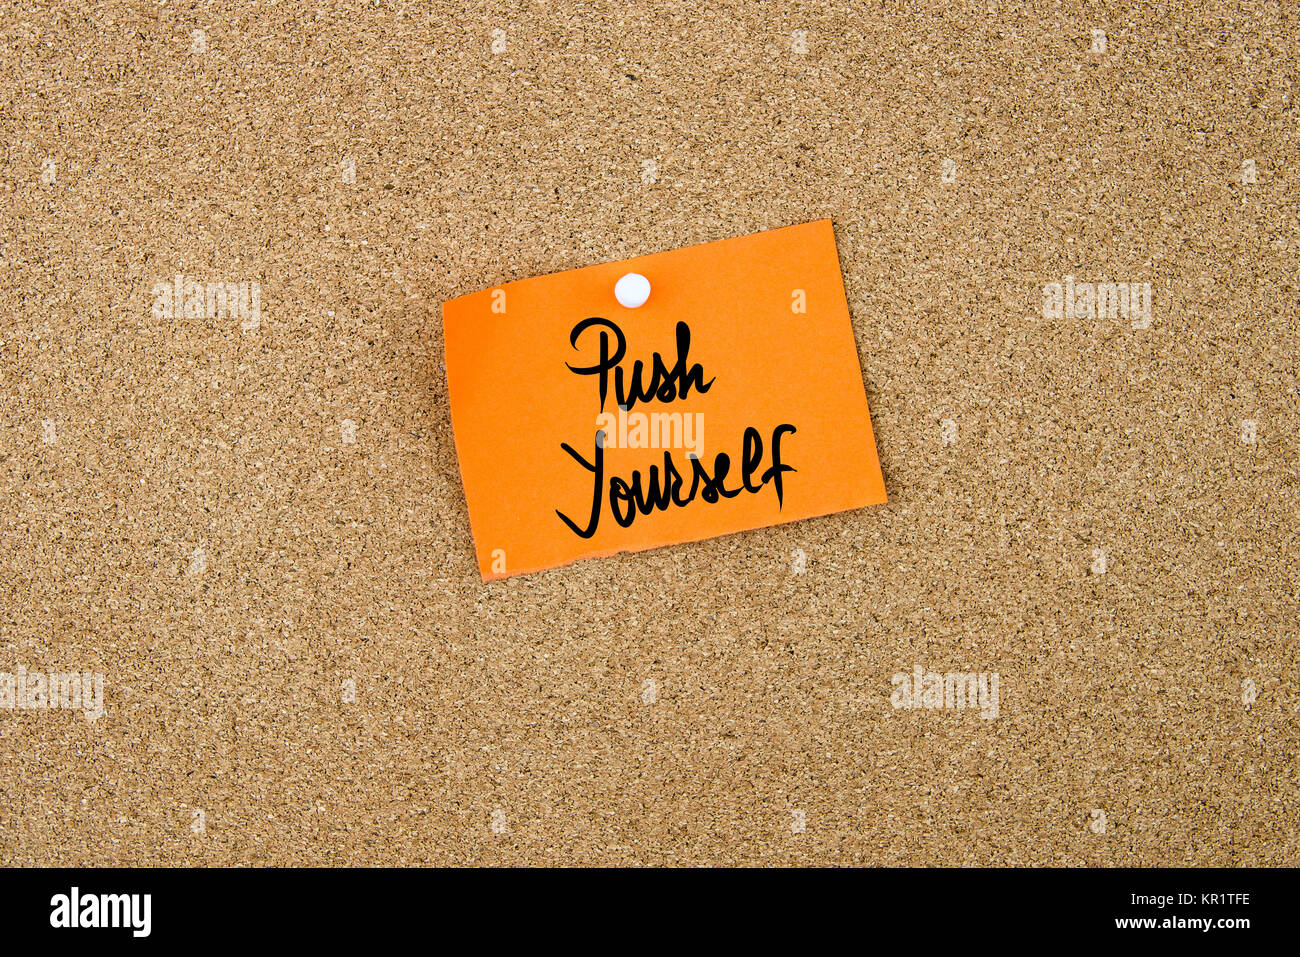 Push Yourself written on orange paper note Stock Photo